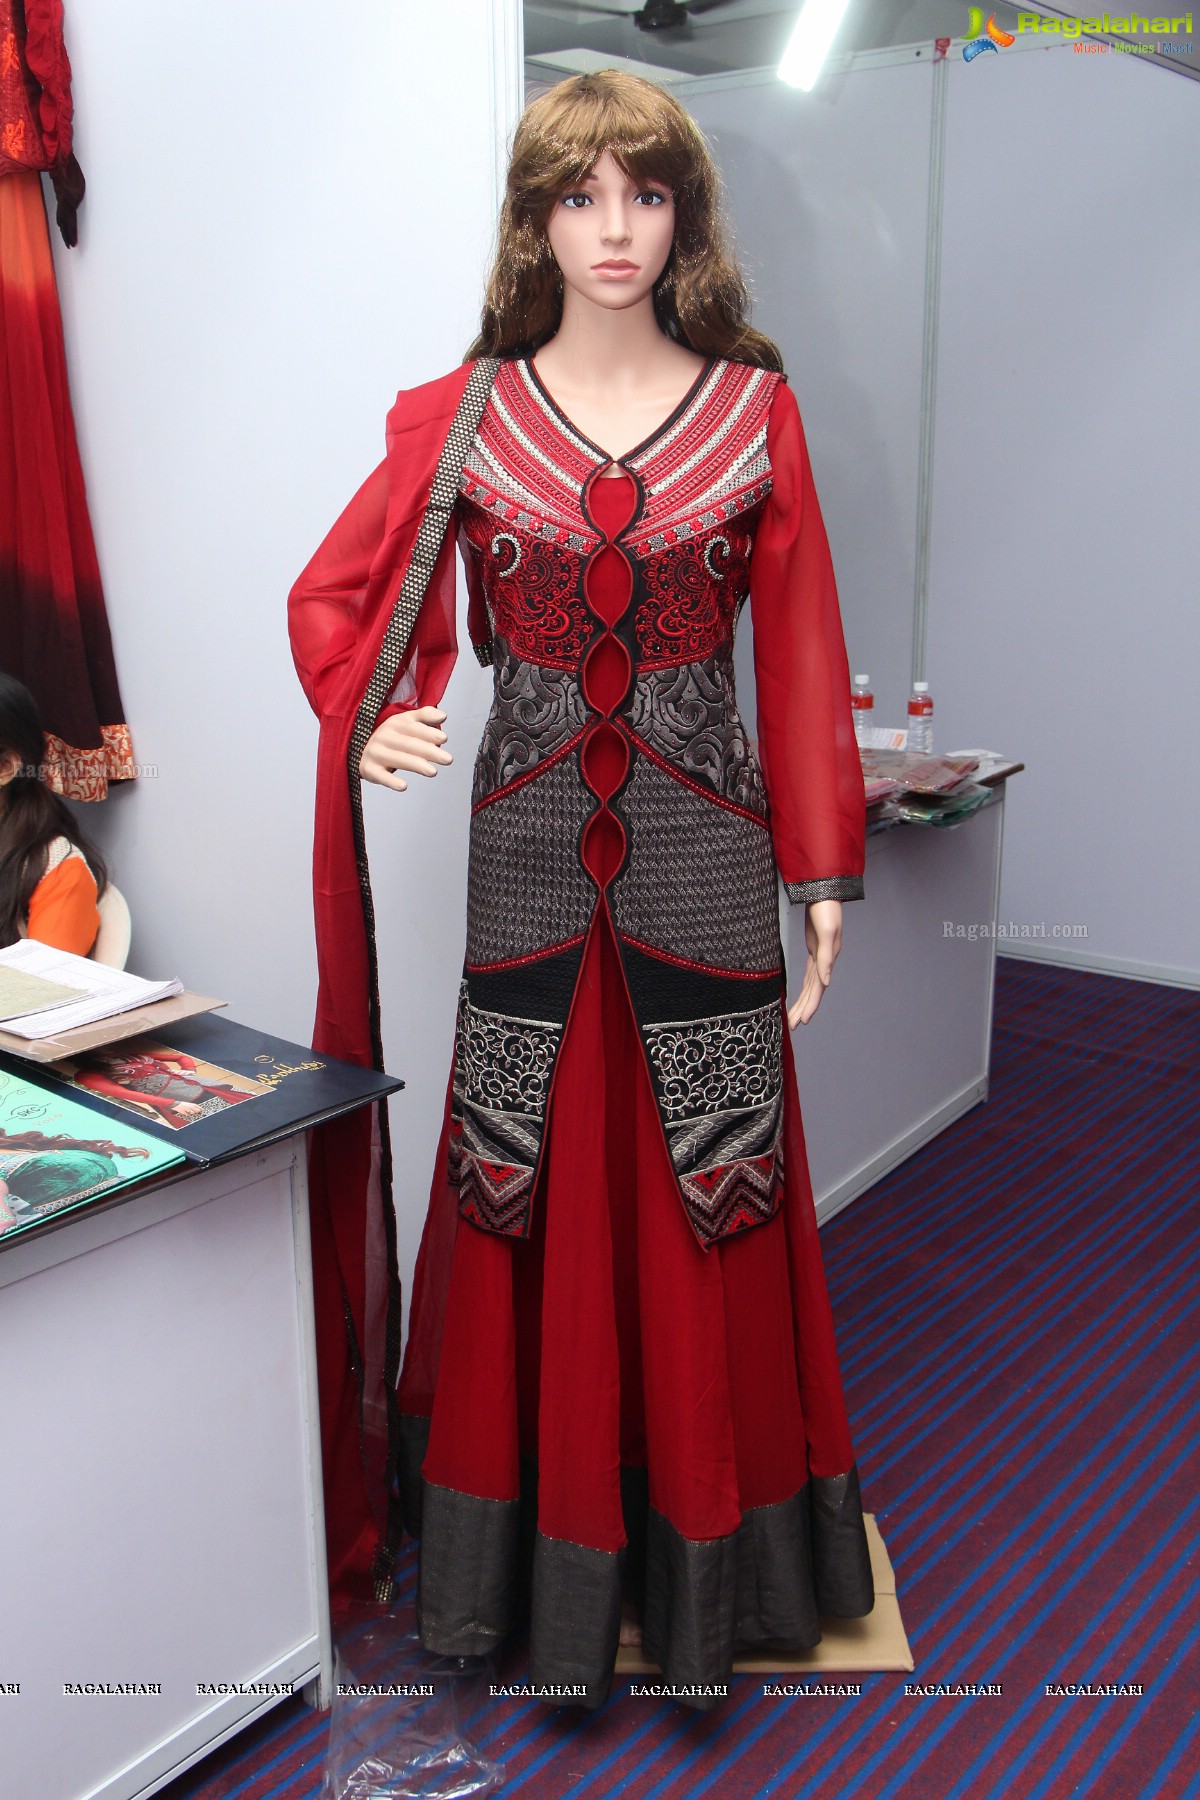 Poojitha Naidu launches Silk Planet Fashion Expo at Kamma Sangham